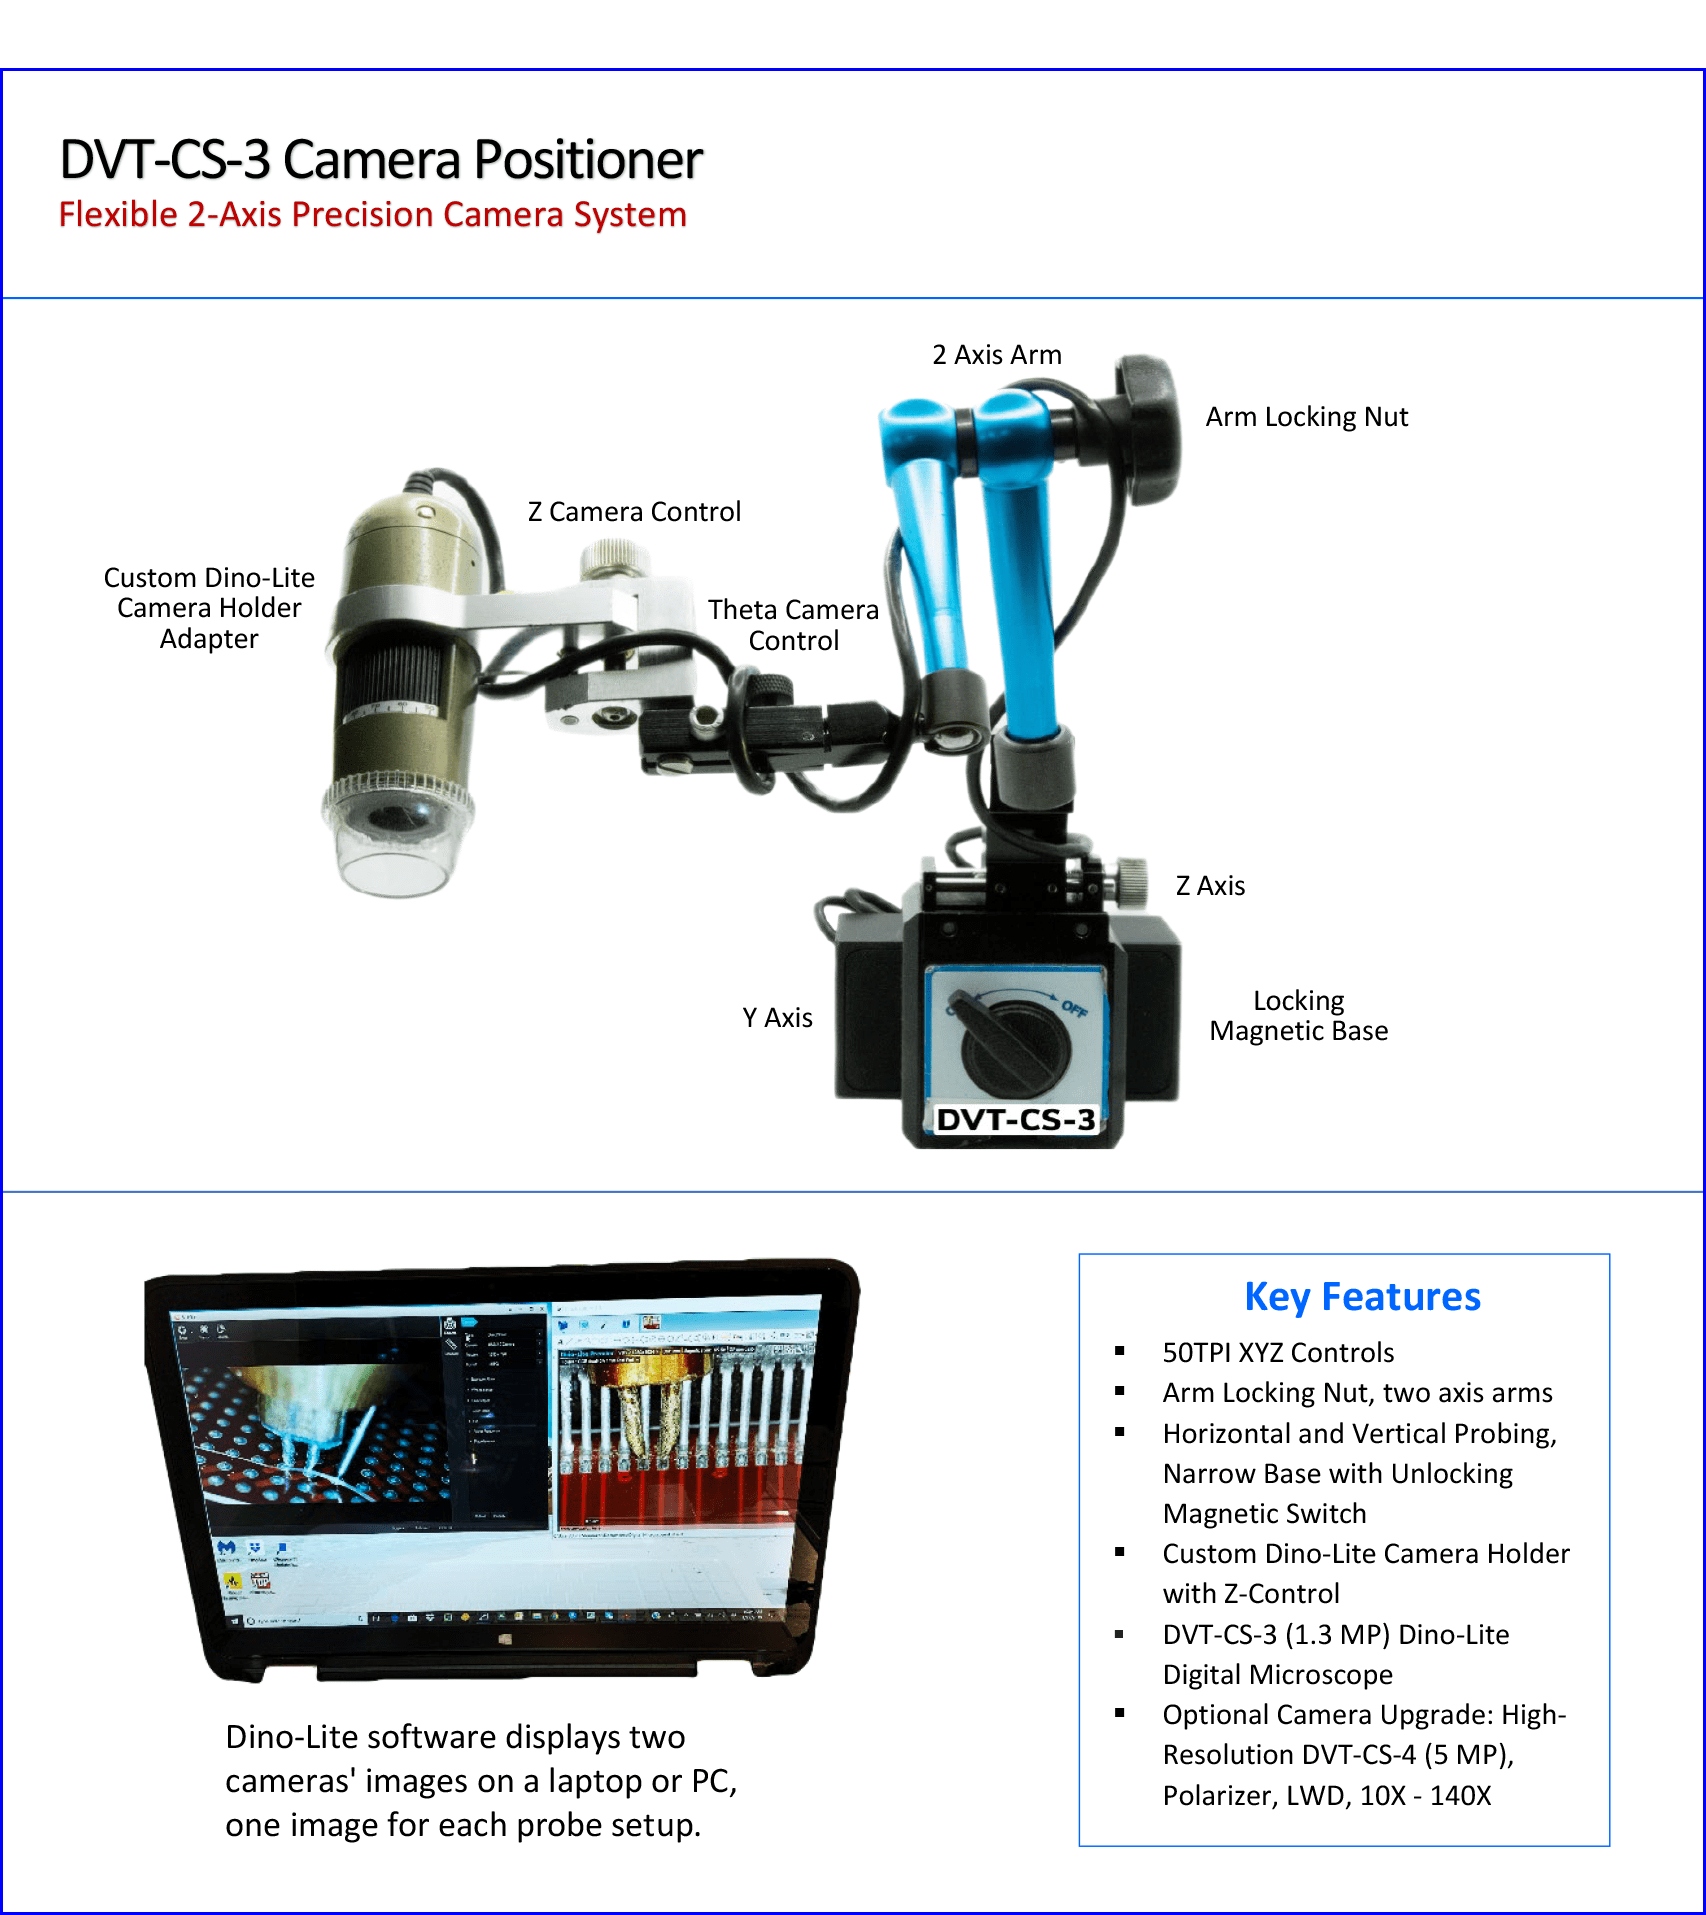 Shows image of the DVT-CS-1 Camera Positioner datasheet.